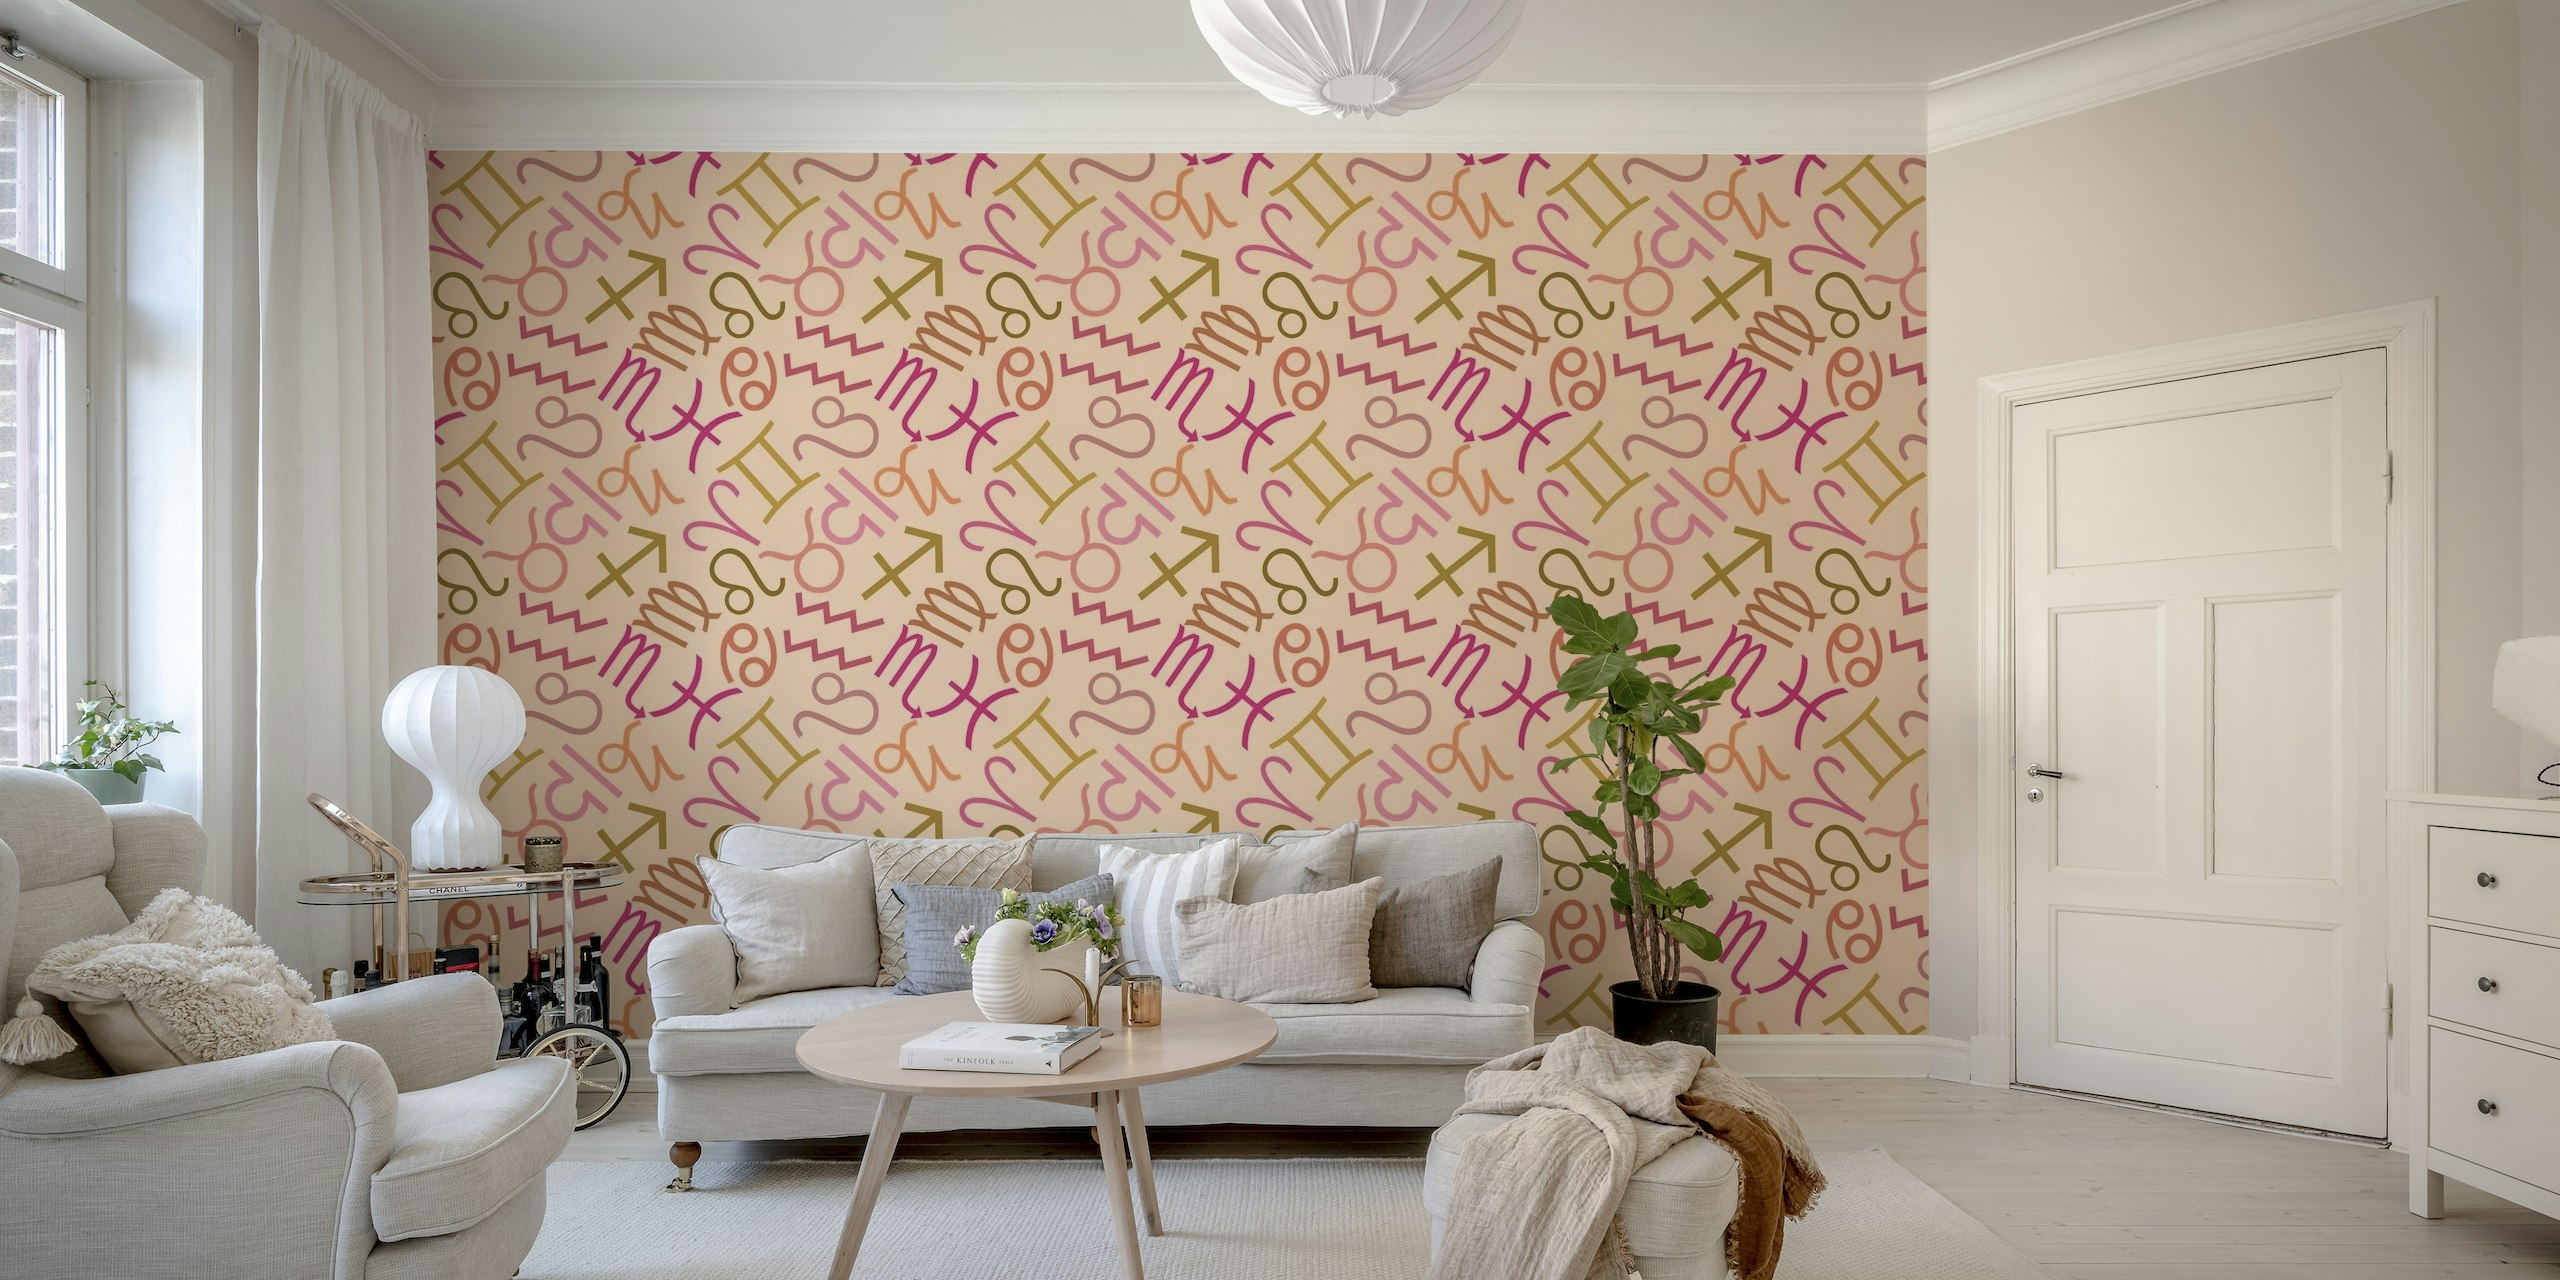 Zodiac symbols wall mural in warm pink shades for interior decor